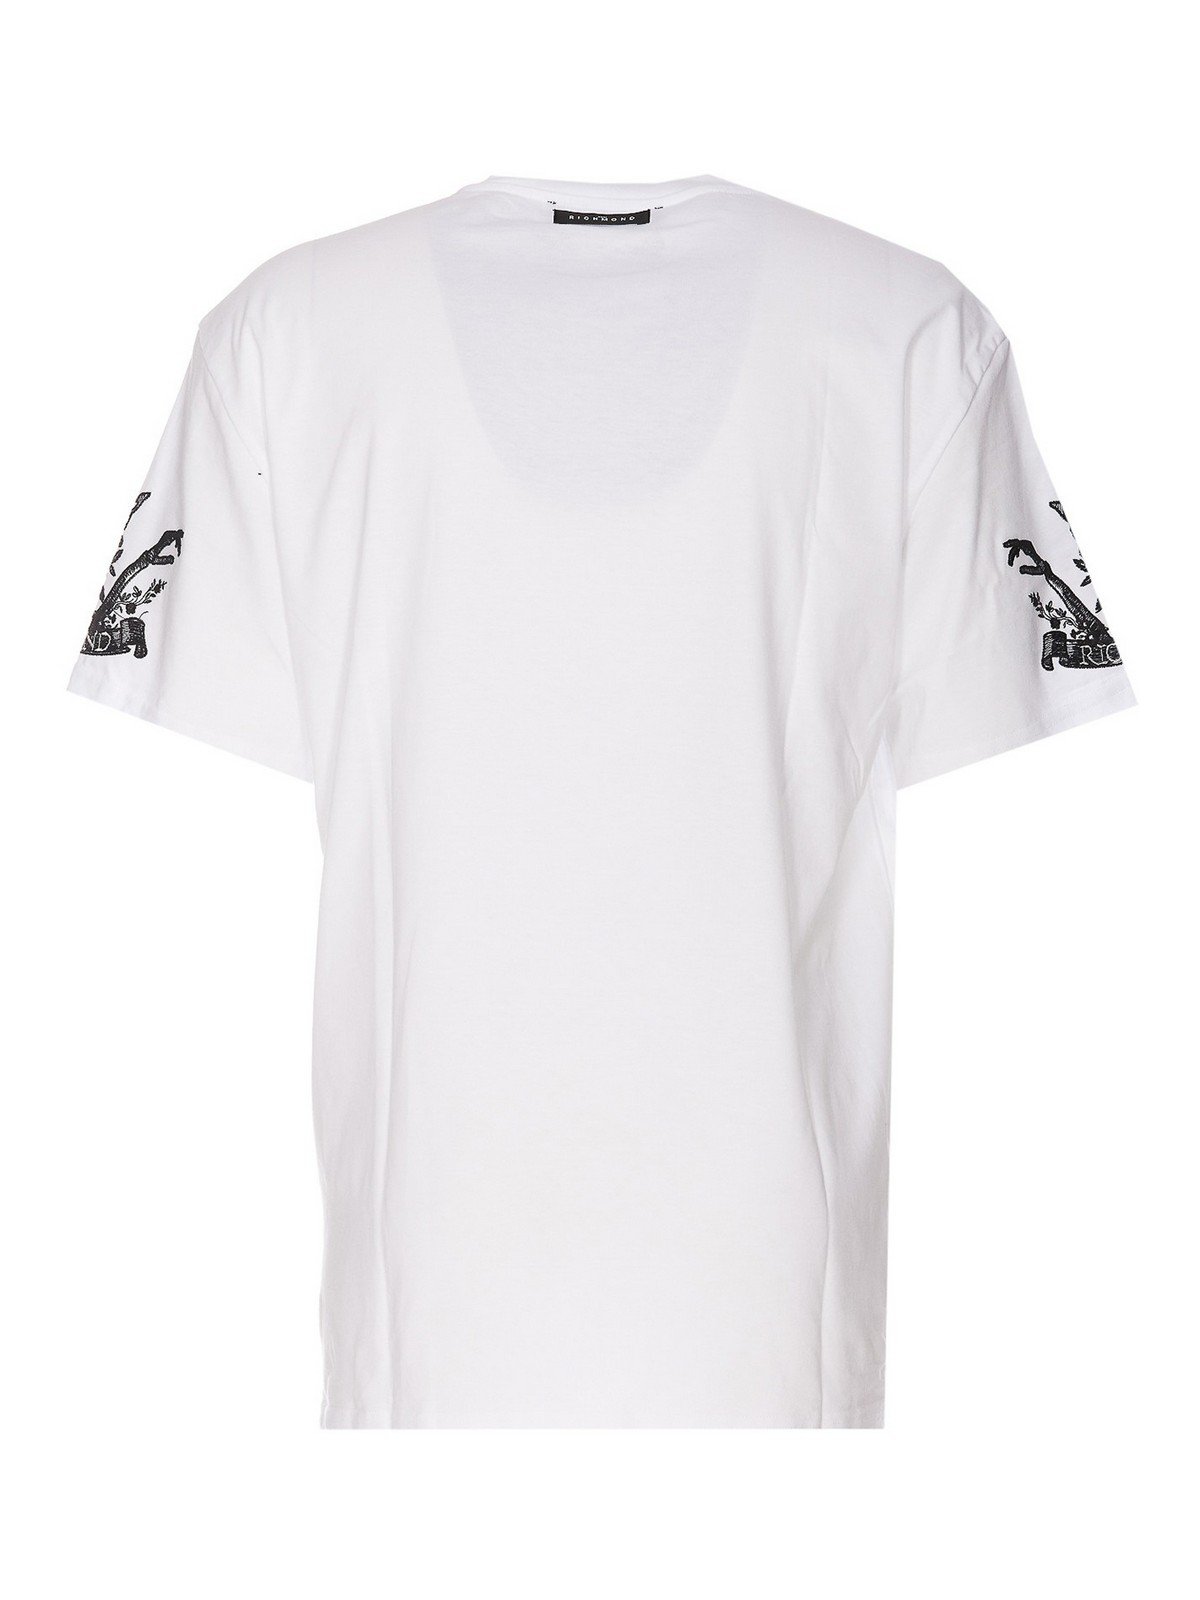 strejke at tilbagetrække Grønthandler T-shirts John Richmond - Embroidered cotton T-shirt - RMP23094TSWHITE